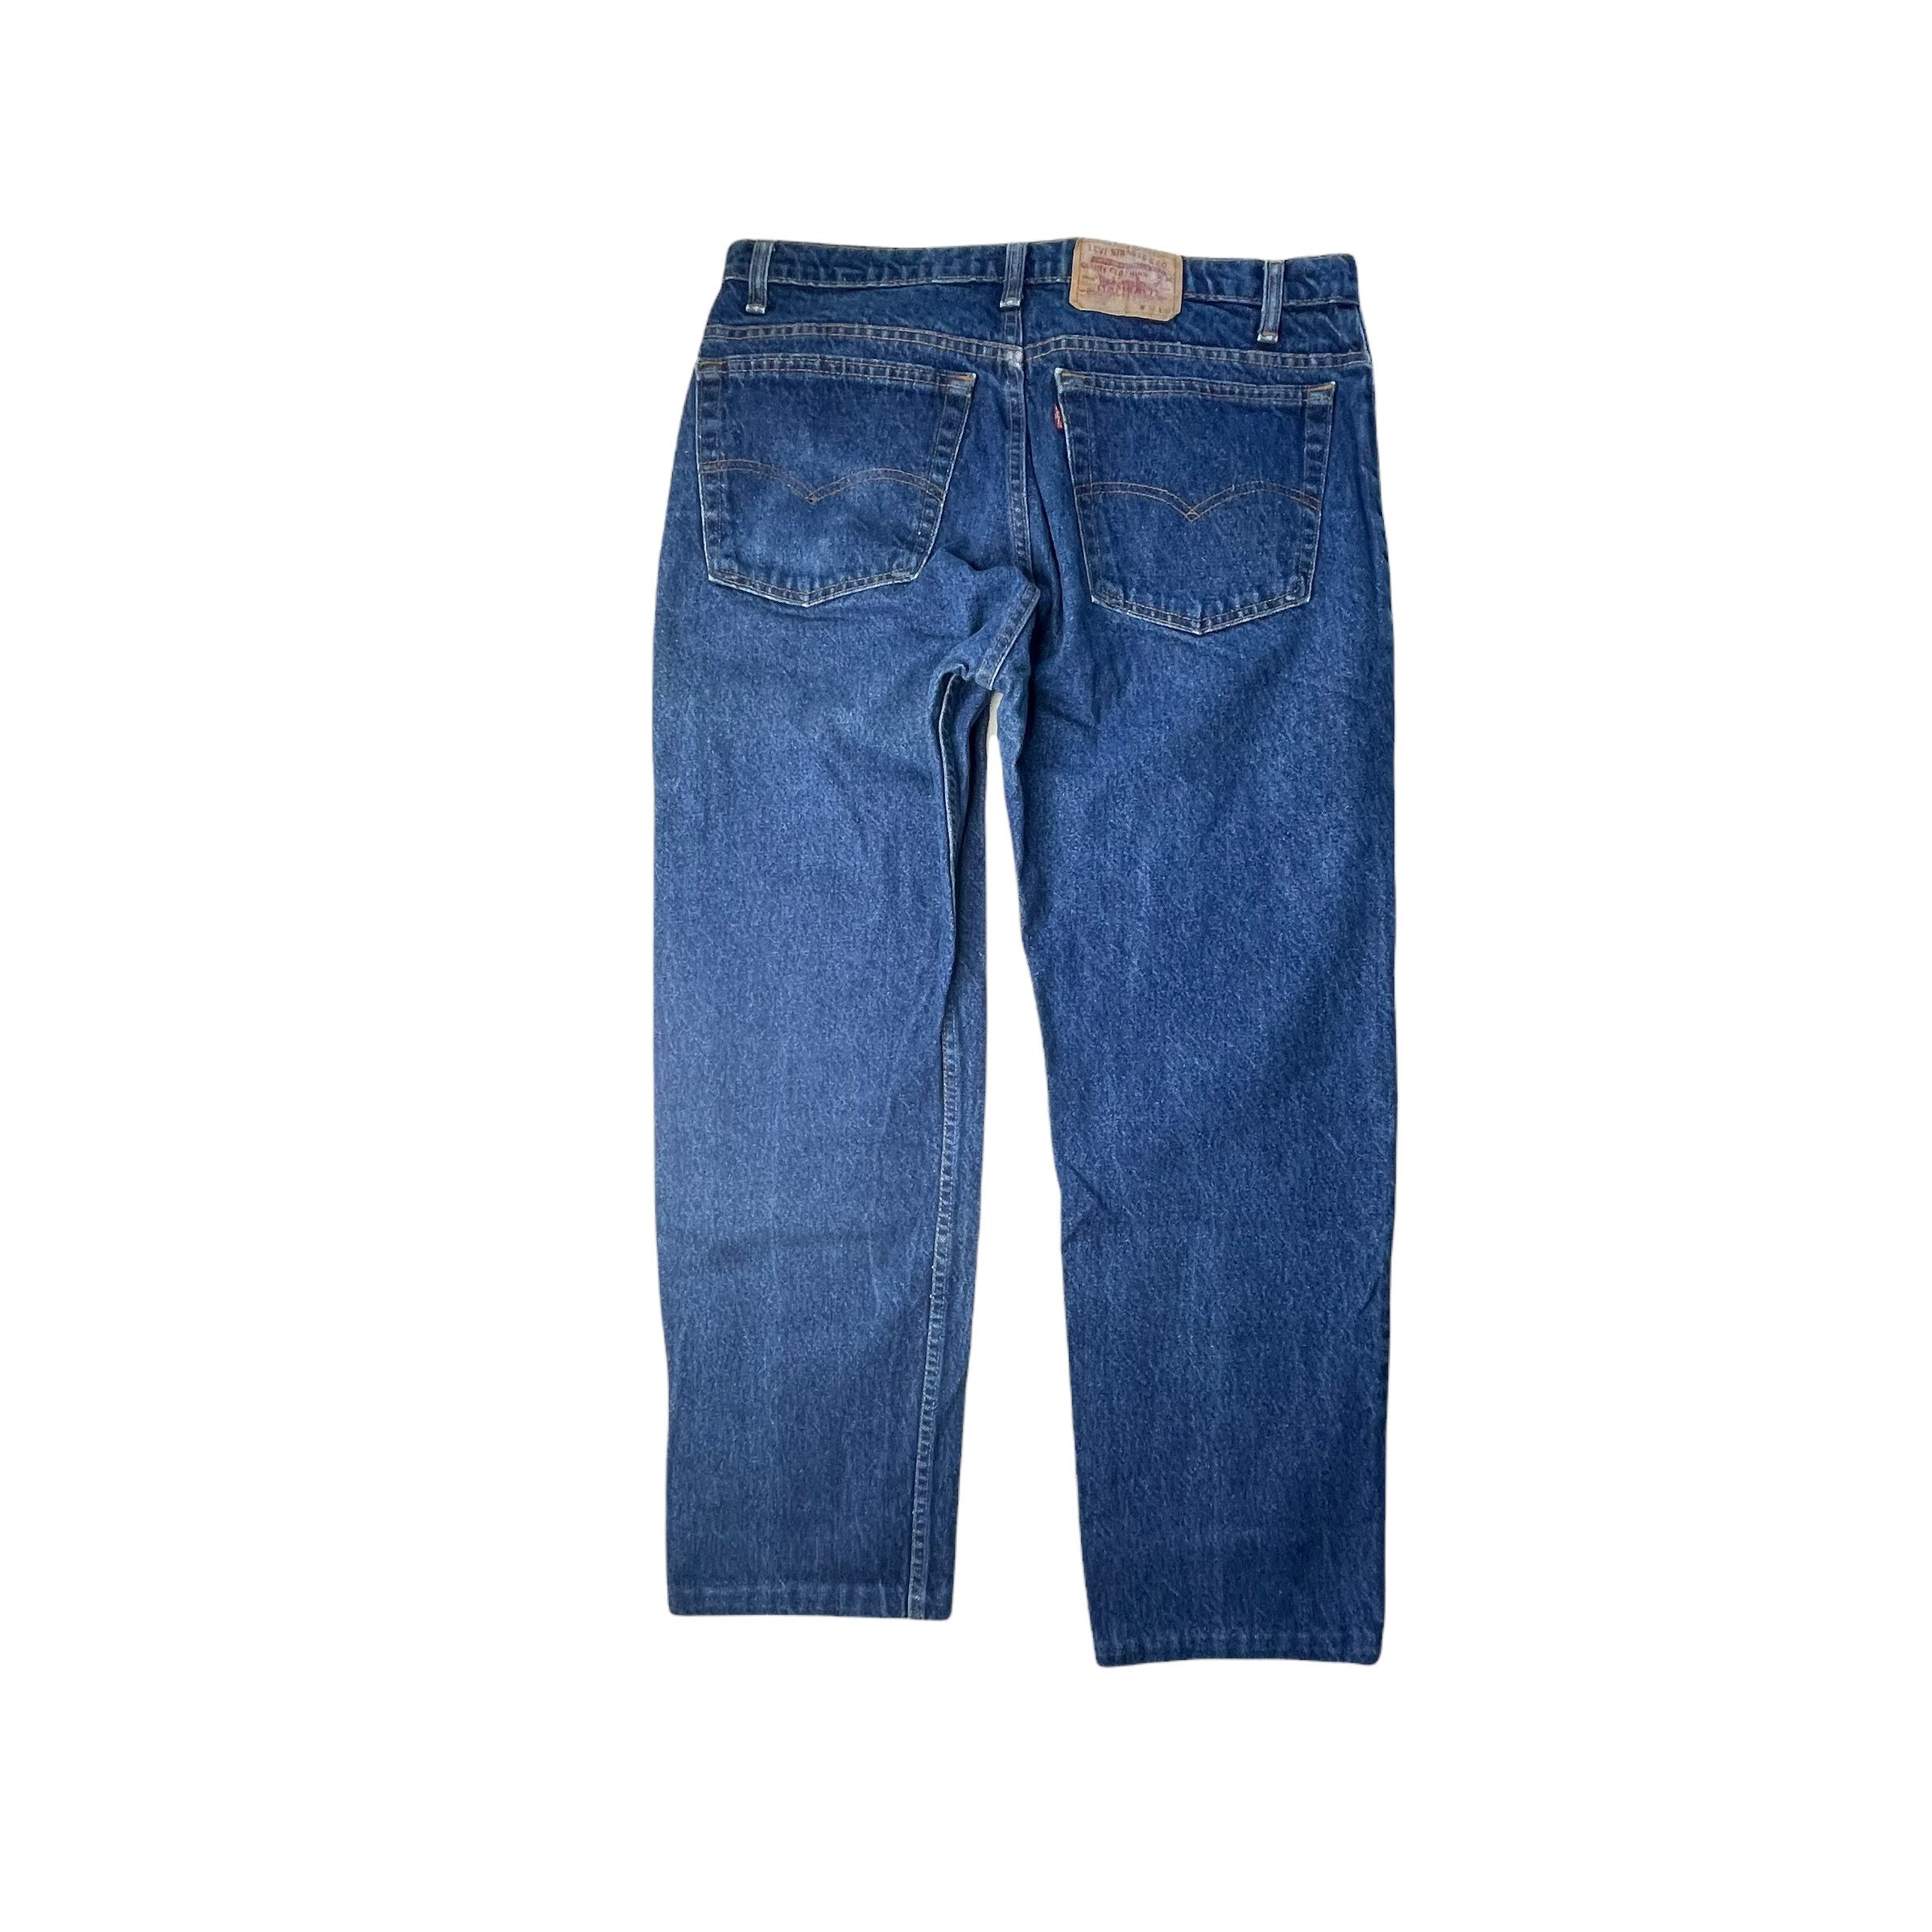 Vintage Levis 505-0216 Jeans Regular Fit Straight Leg Made - Etsy